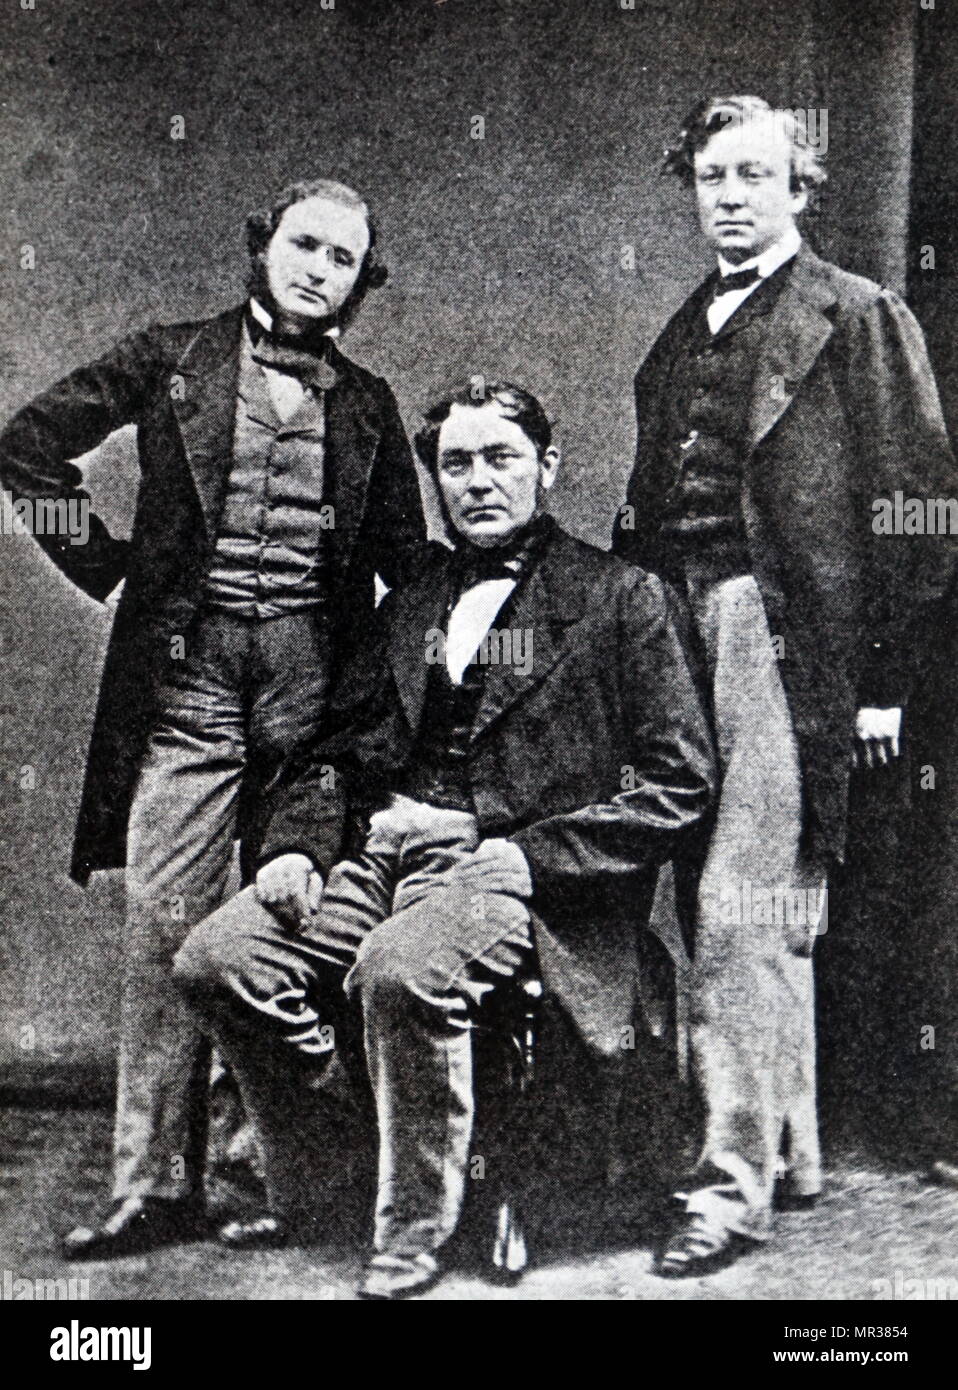 Photographic portrait of Gustav Kirchhoff, Robert Bunsen, and Henry Roscoe. Left to right: Gustav Kirchhoff (1824-1887) a German physicist, Robert Bunsen (1811-1899) a German Chemist, and Henry Roscoe (1833-1915) an English Chemist. Dated 19th century Stock Photo